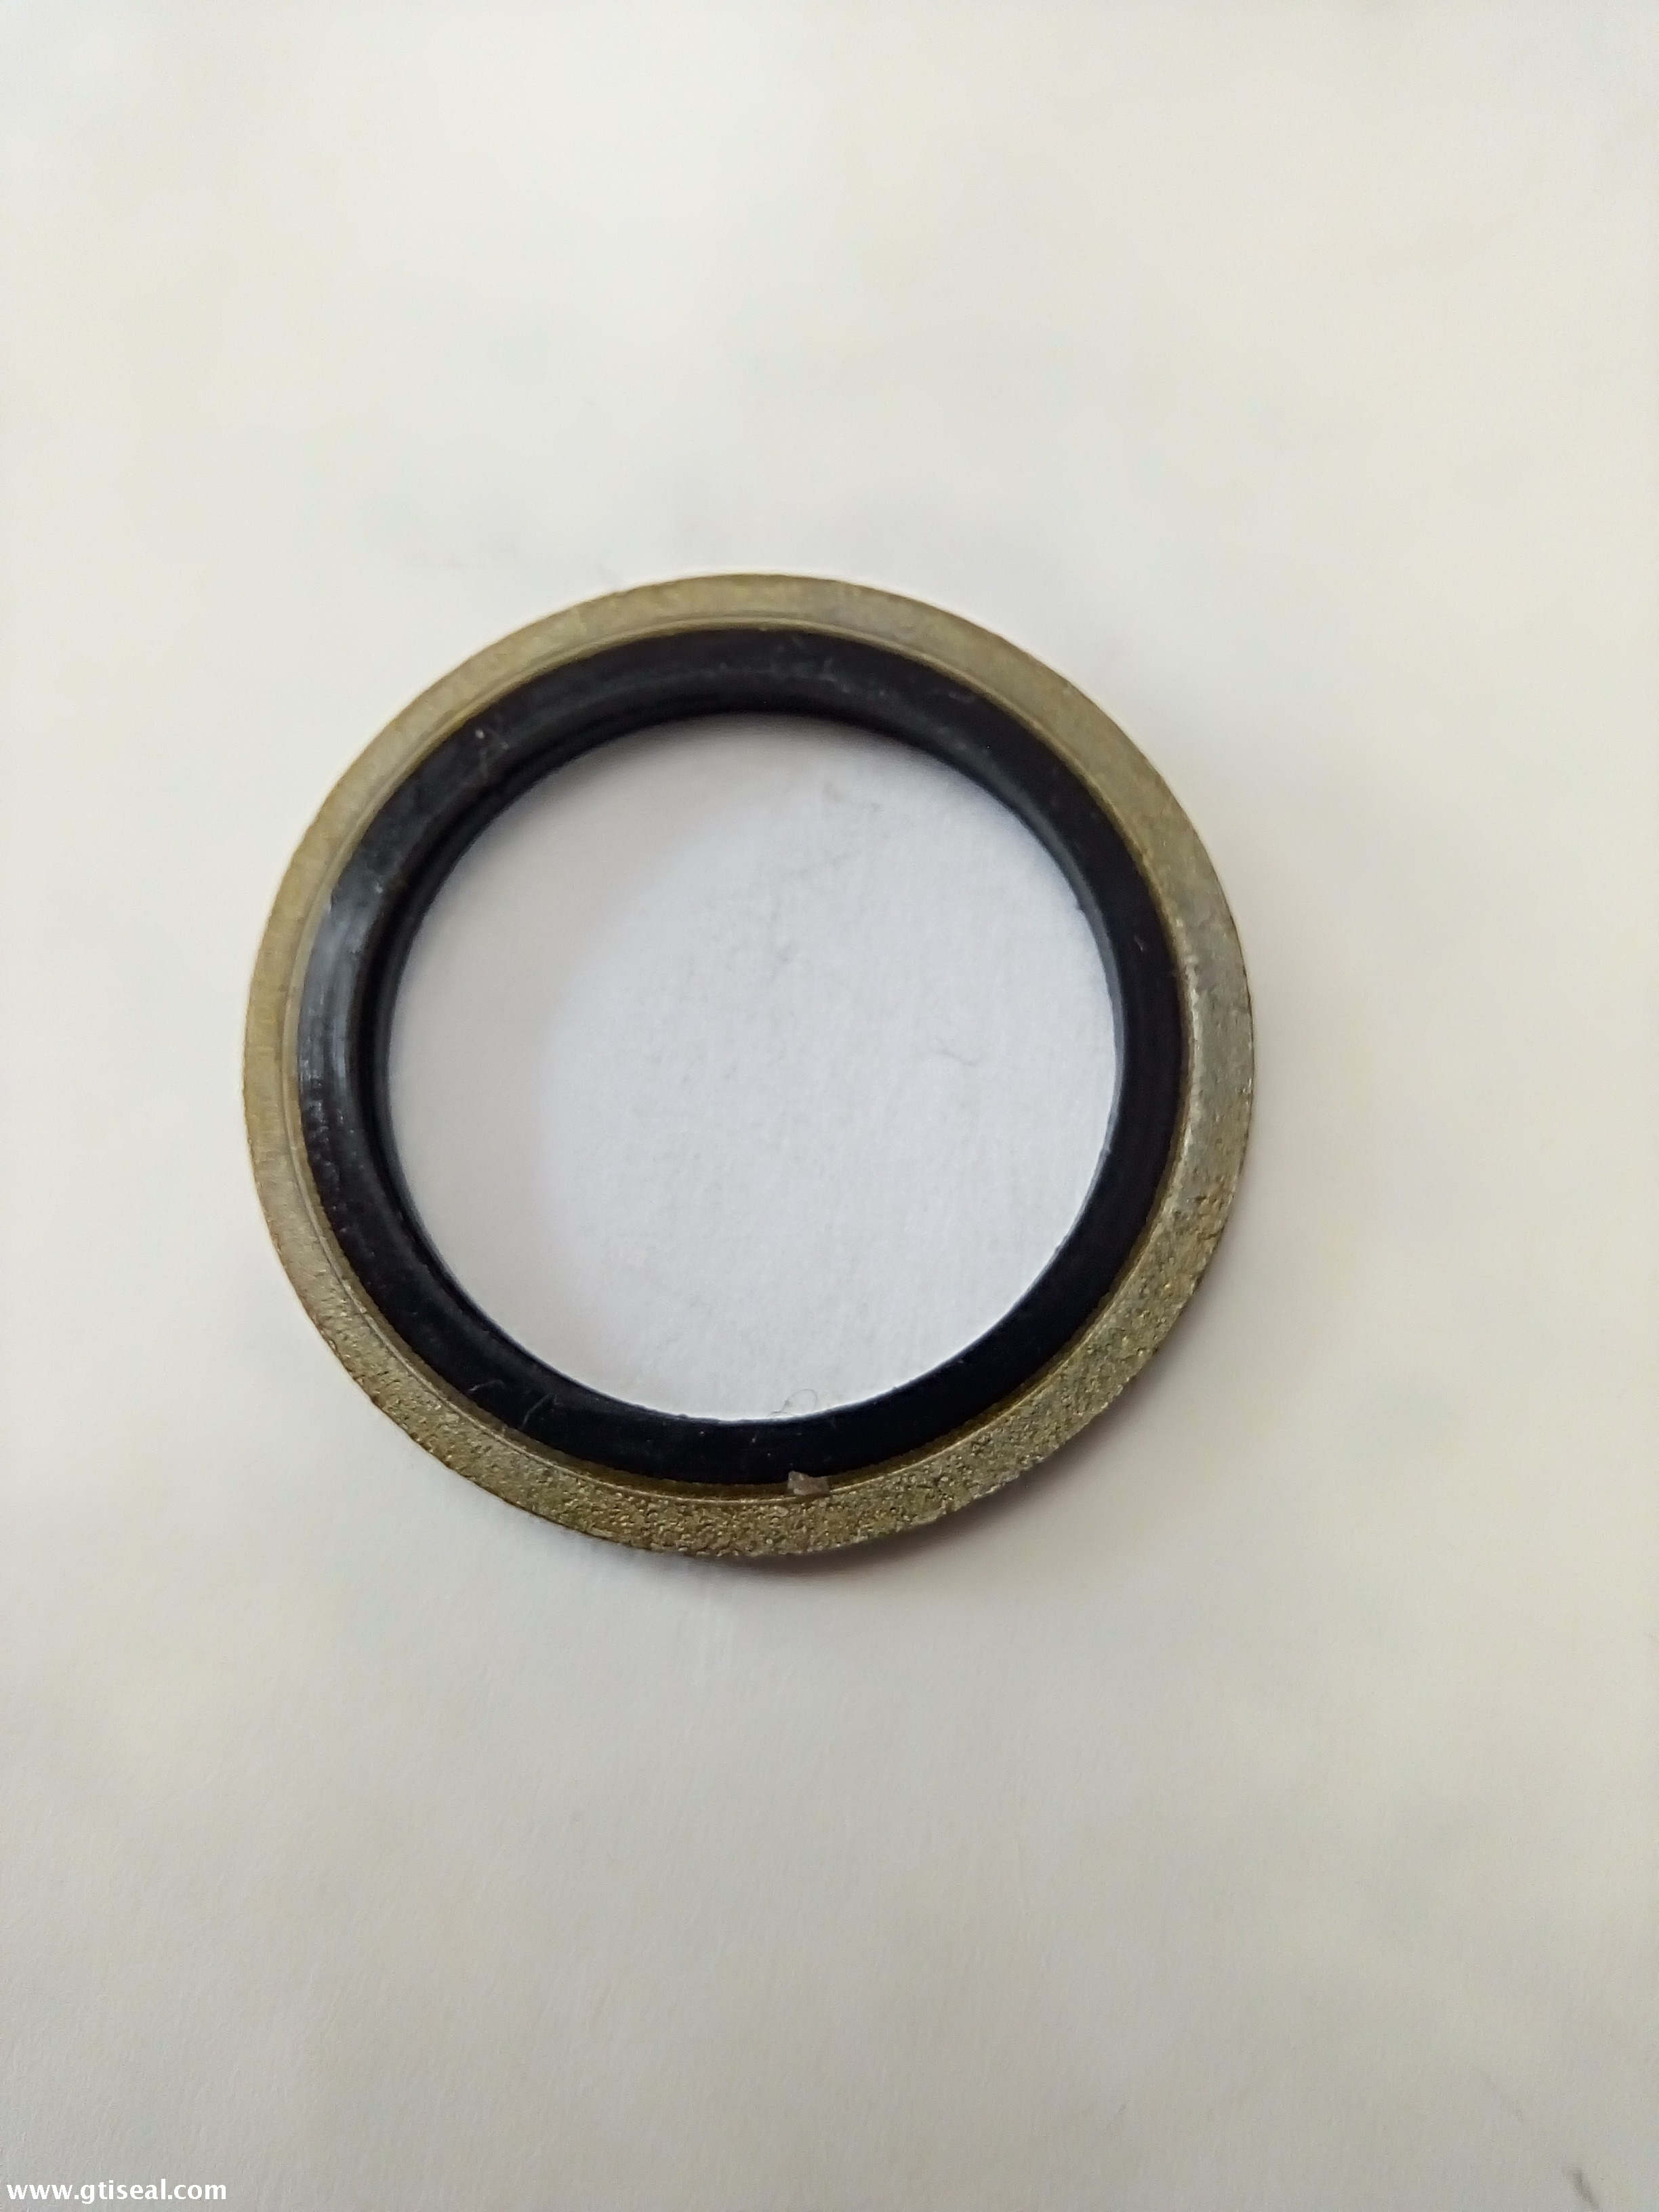 Cylinder Use Industrial Rubber+Metal Bonded Seals Washer 